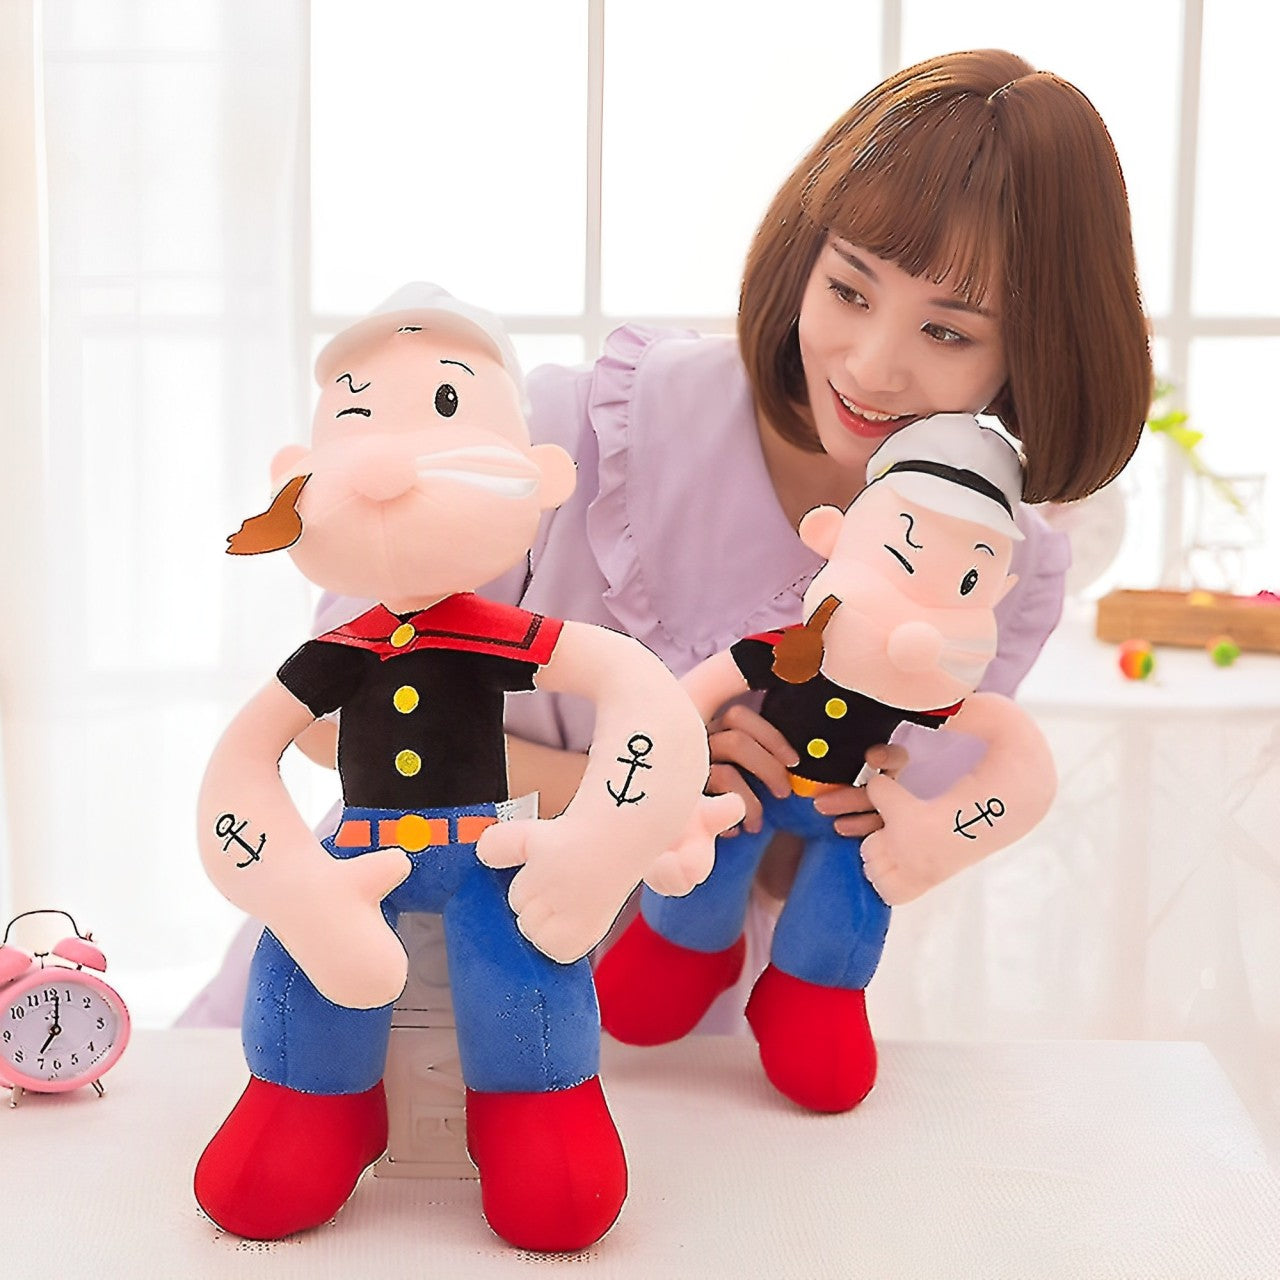 Adorable Popeye Plush Soft Toy